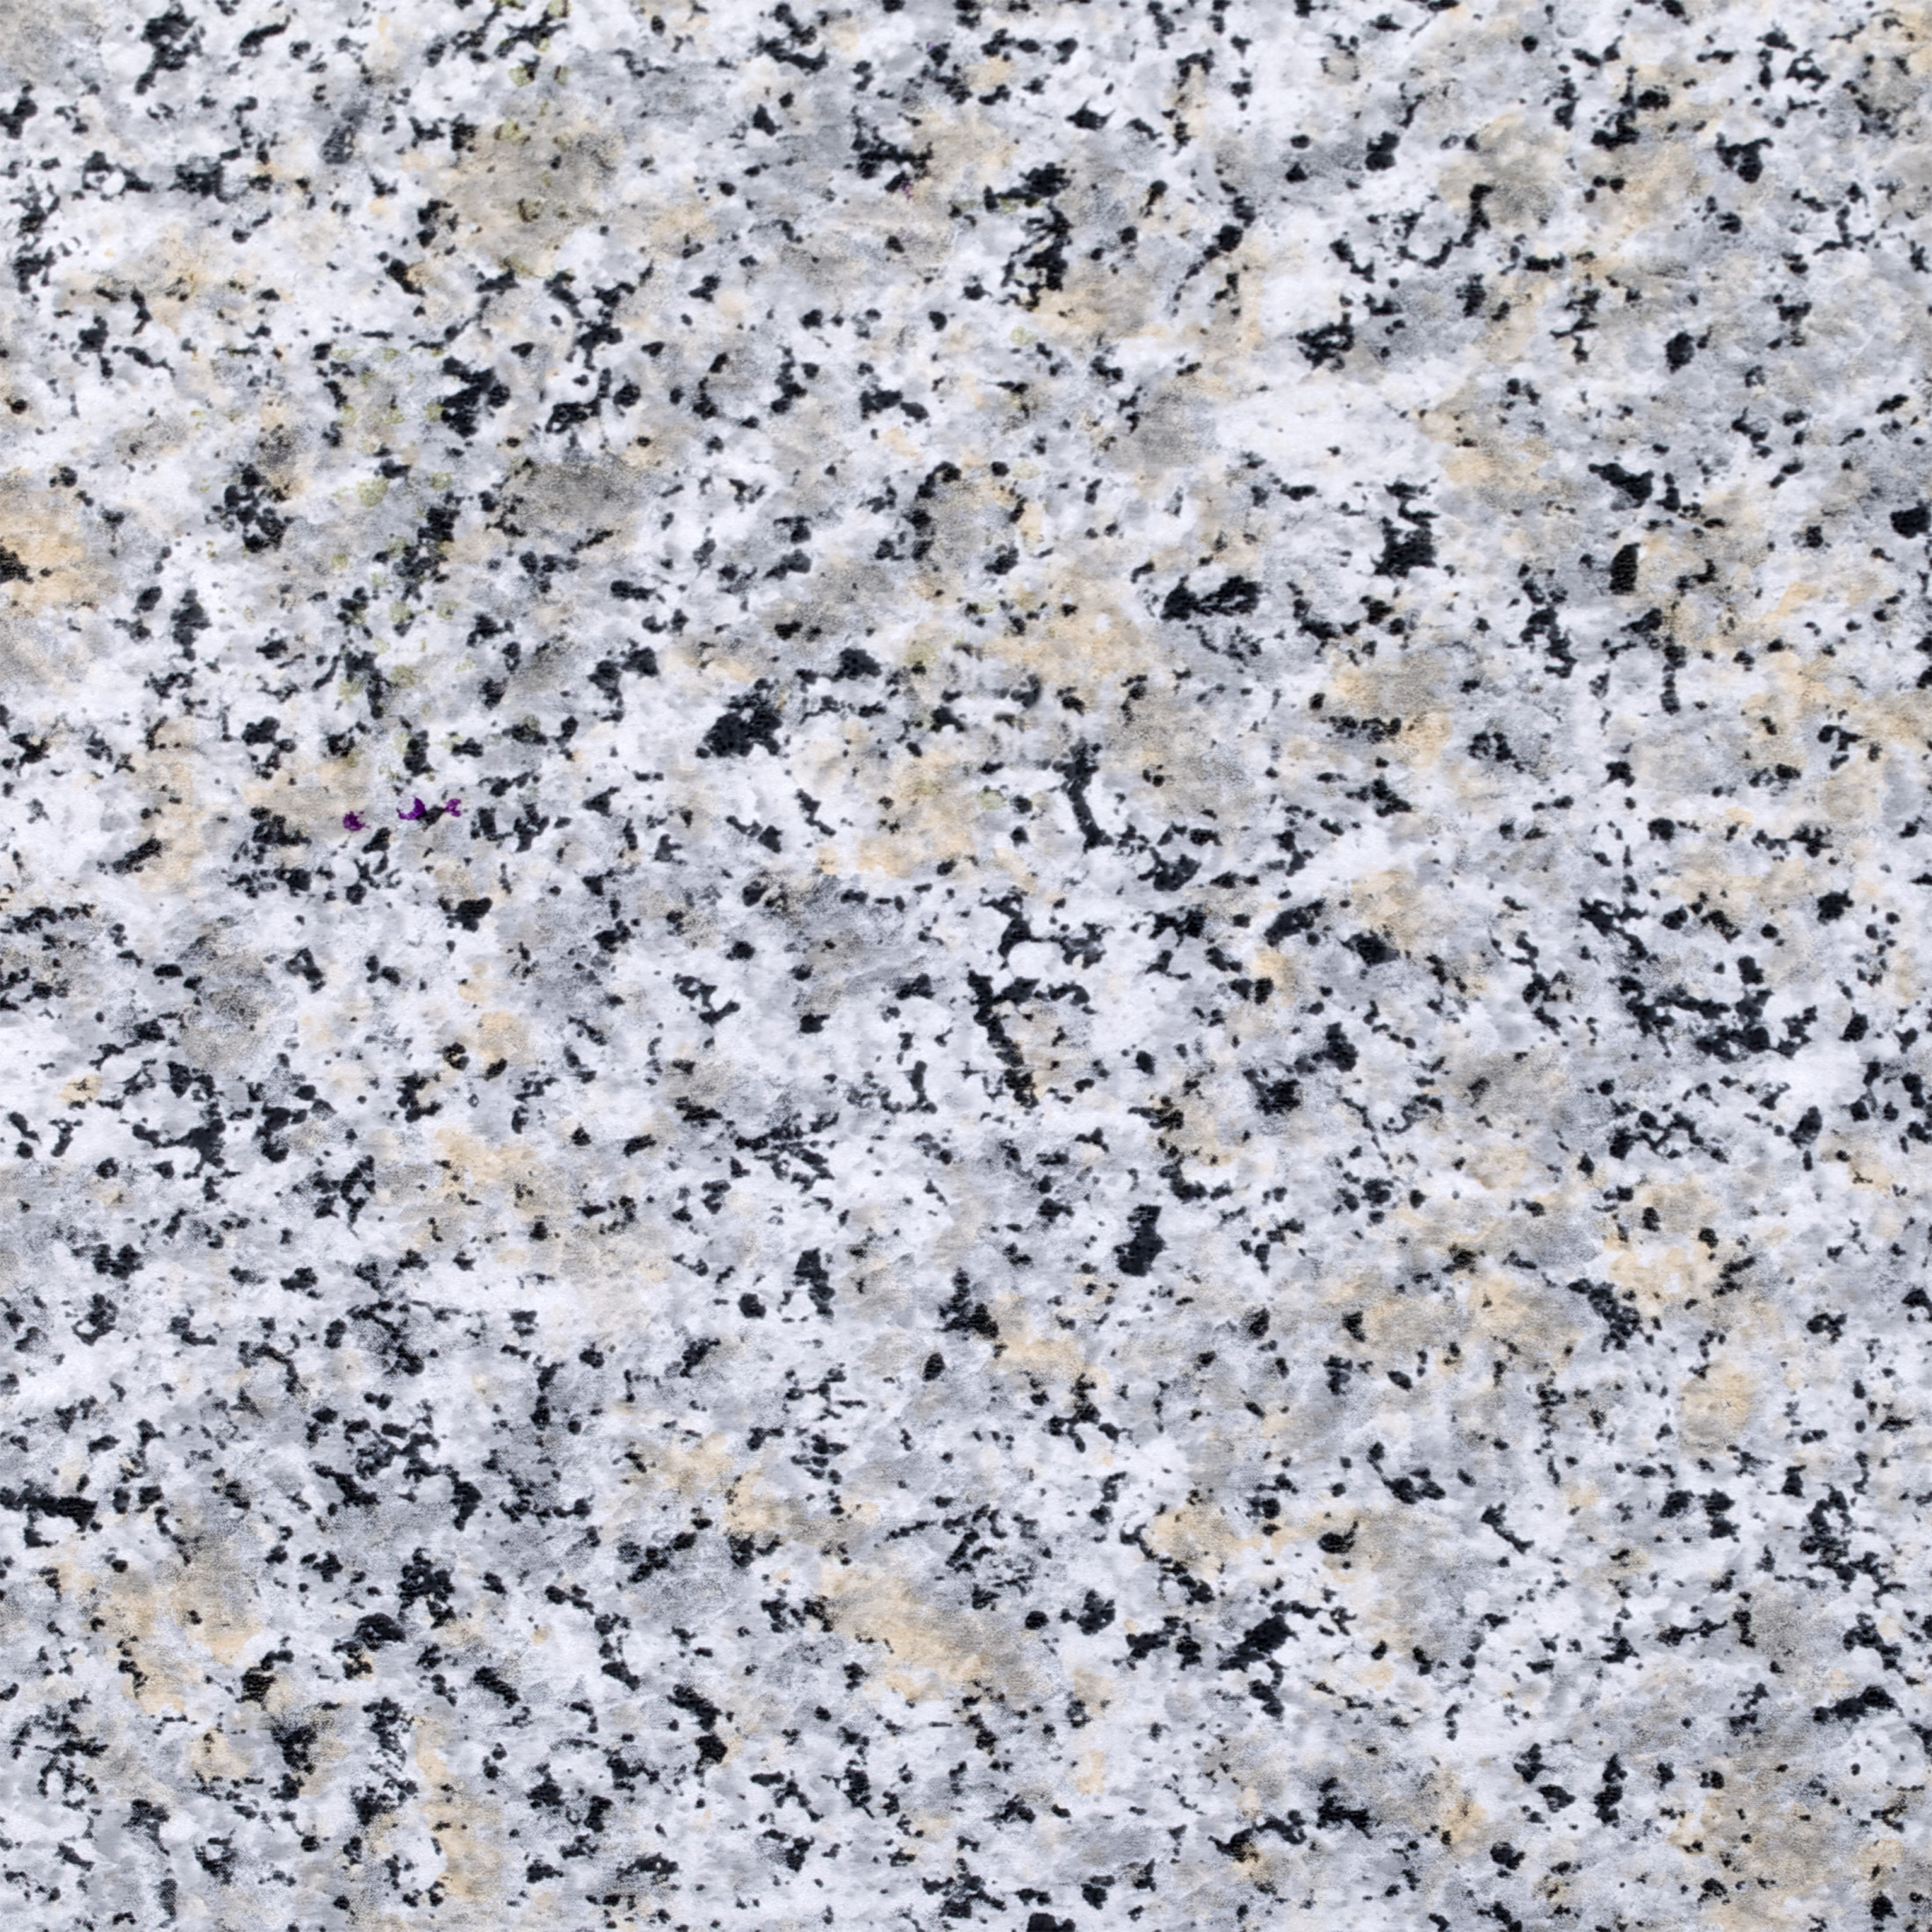 EasyLiner Smooth Top Shelf Liner, Grey Granite, 20 in. x 18 ft. Roll - image 5 of 11